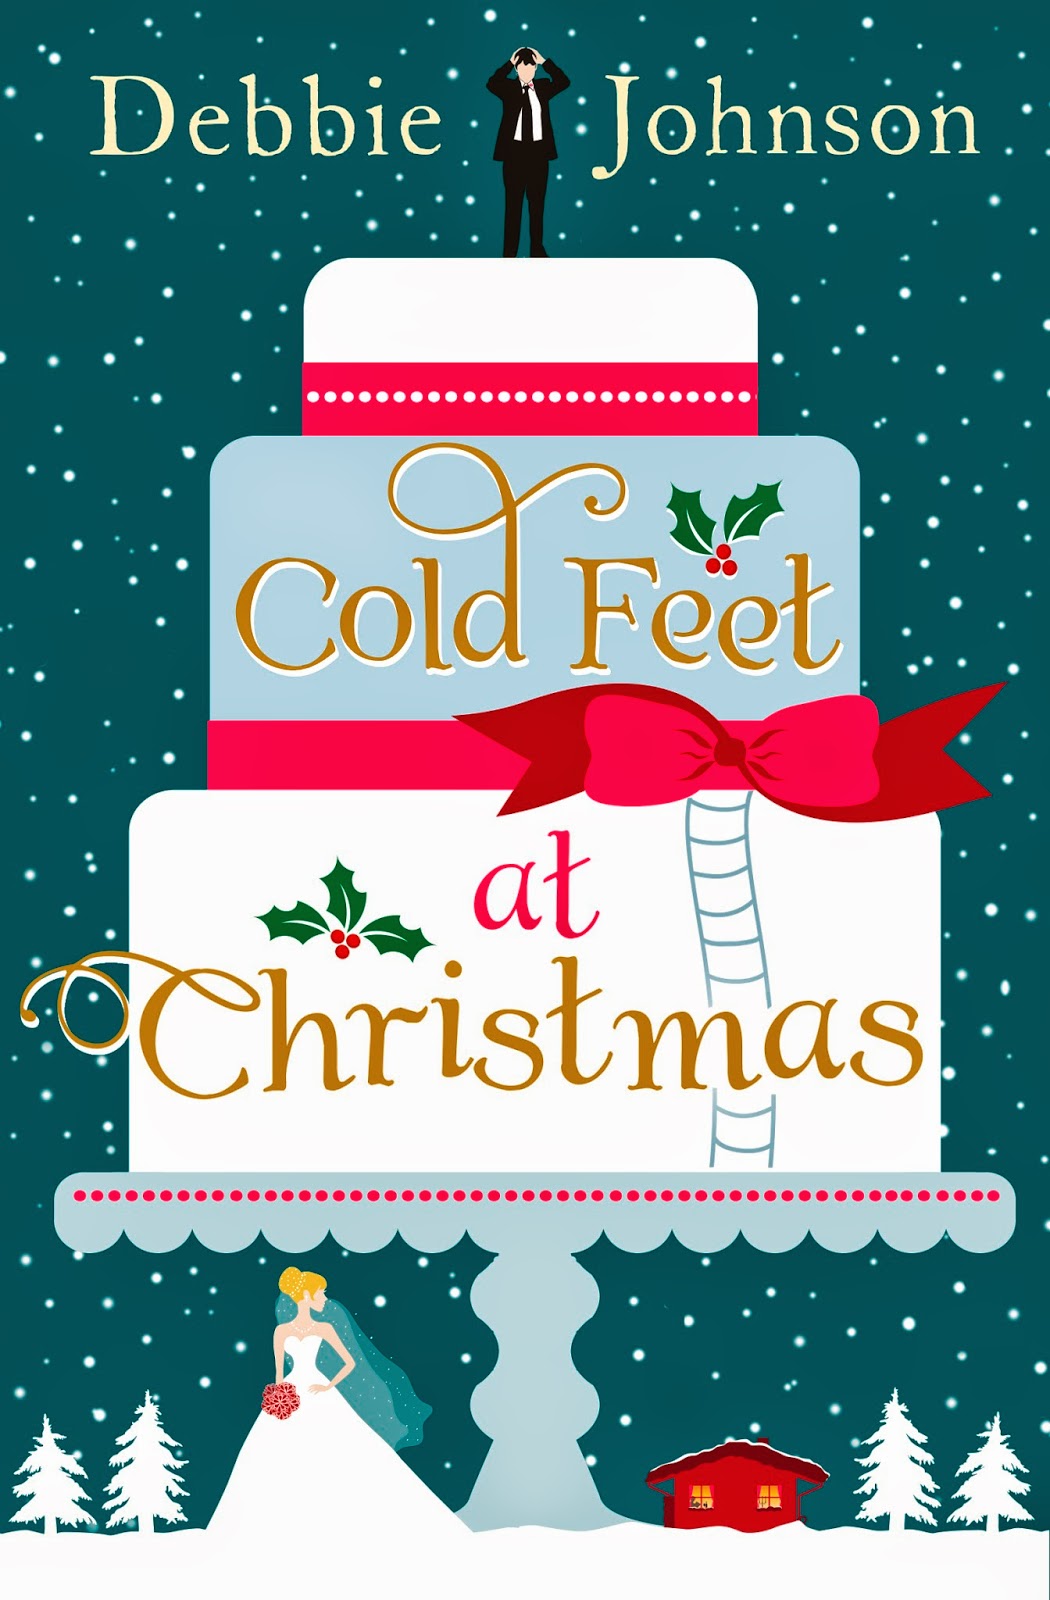 Cold book. Debbie Johnson. Johnson&Johnson Christmas. Fabulously. Christmas feet.